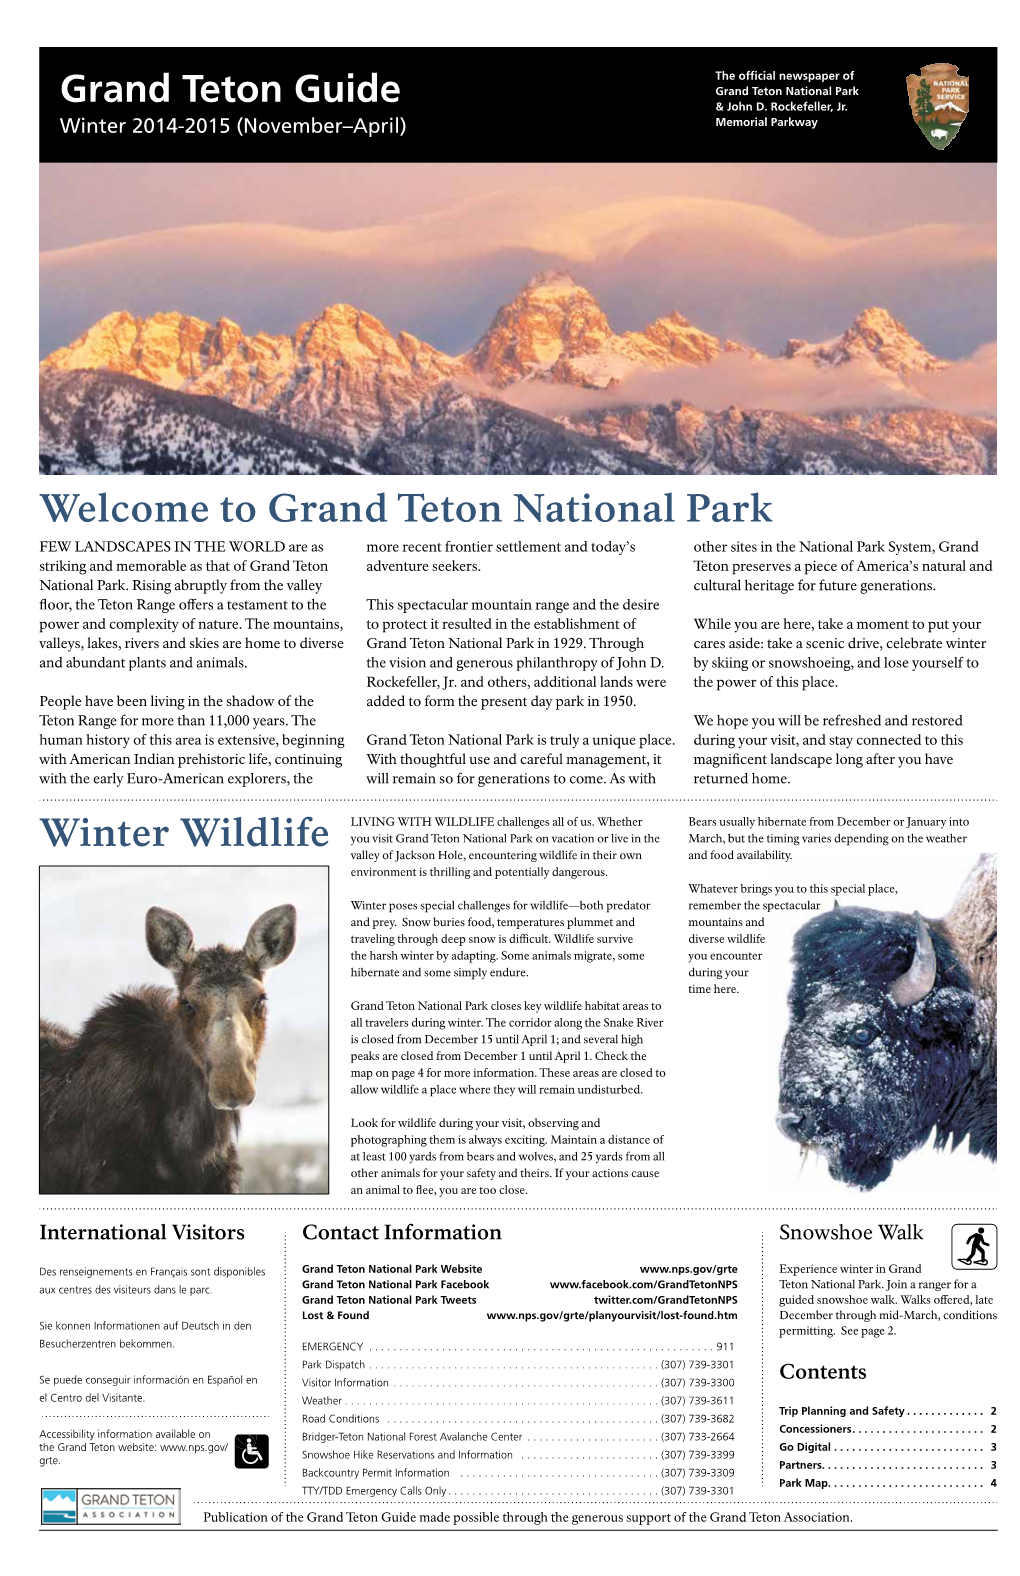 Grand Teton National Park Grand Teton Guide Winter Wildlife